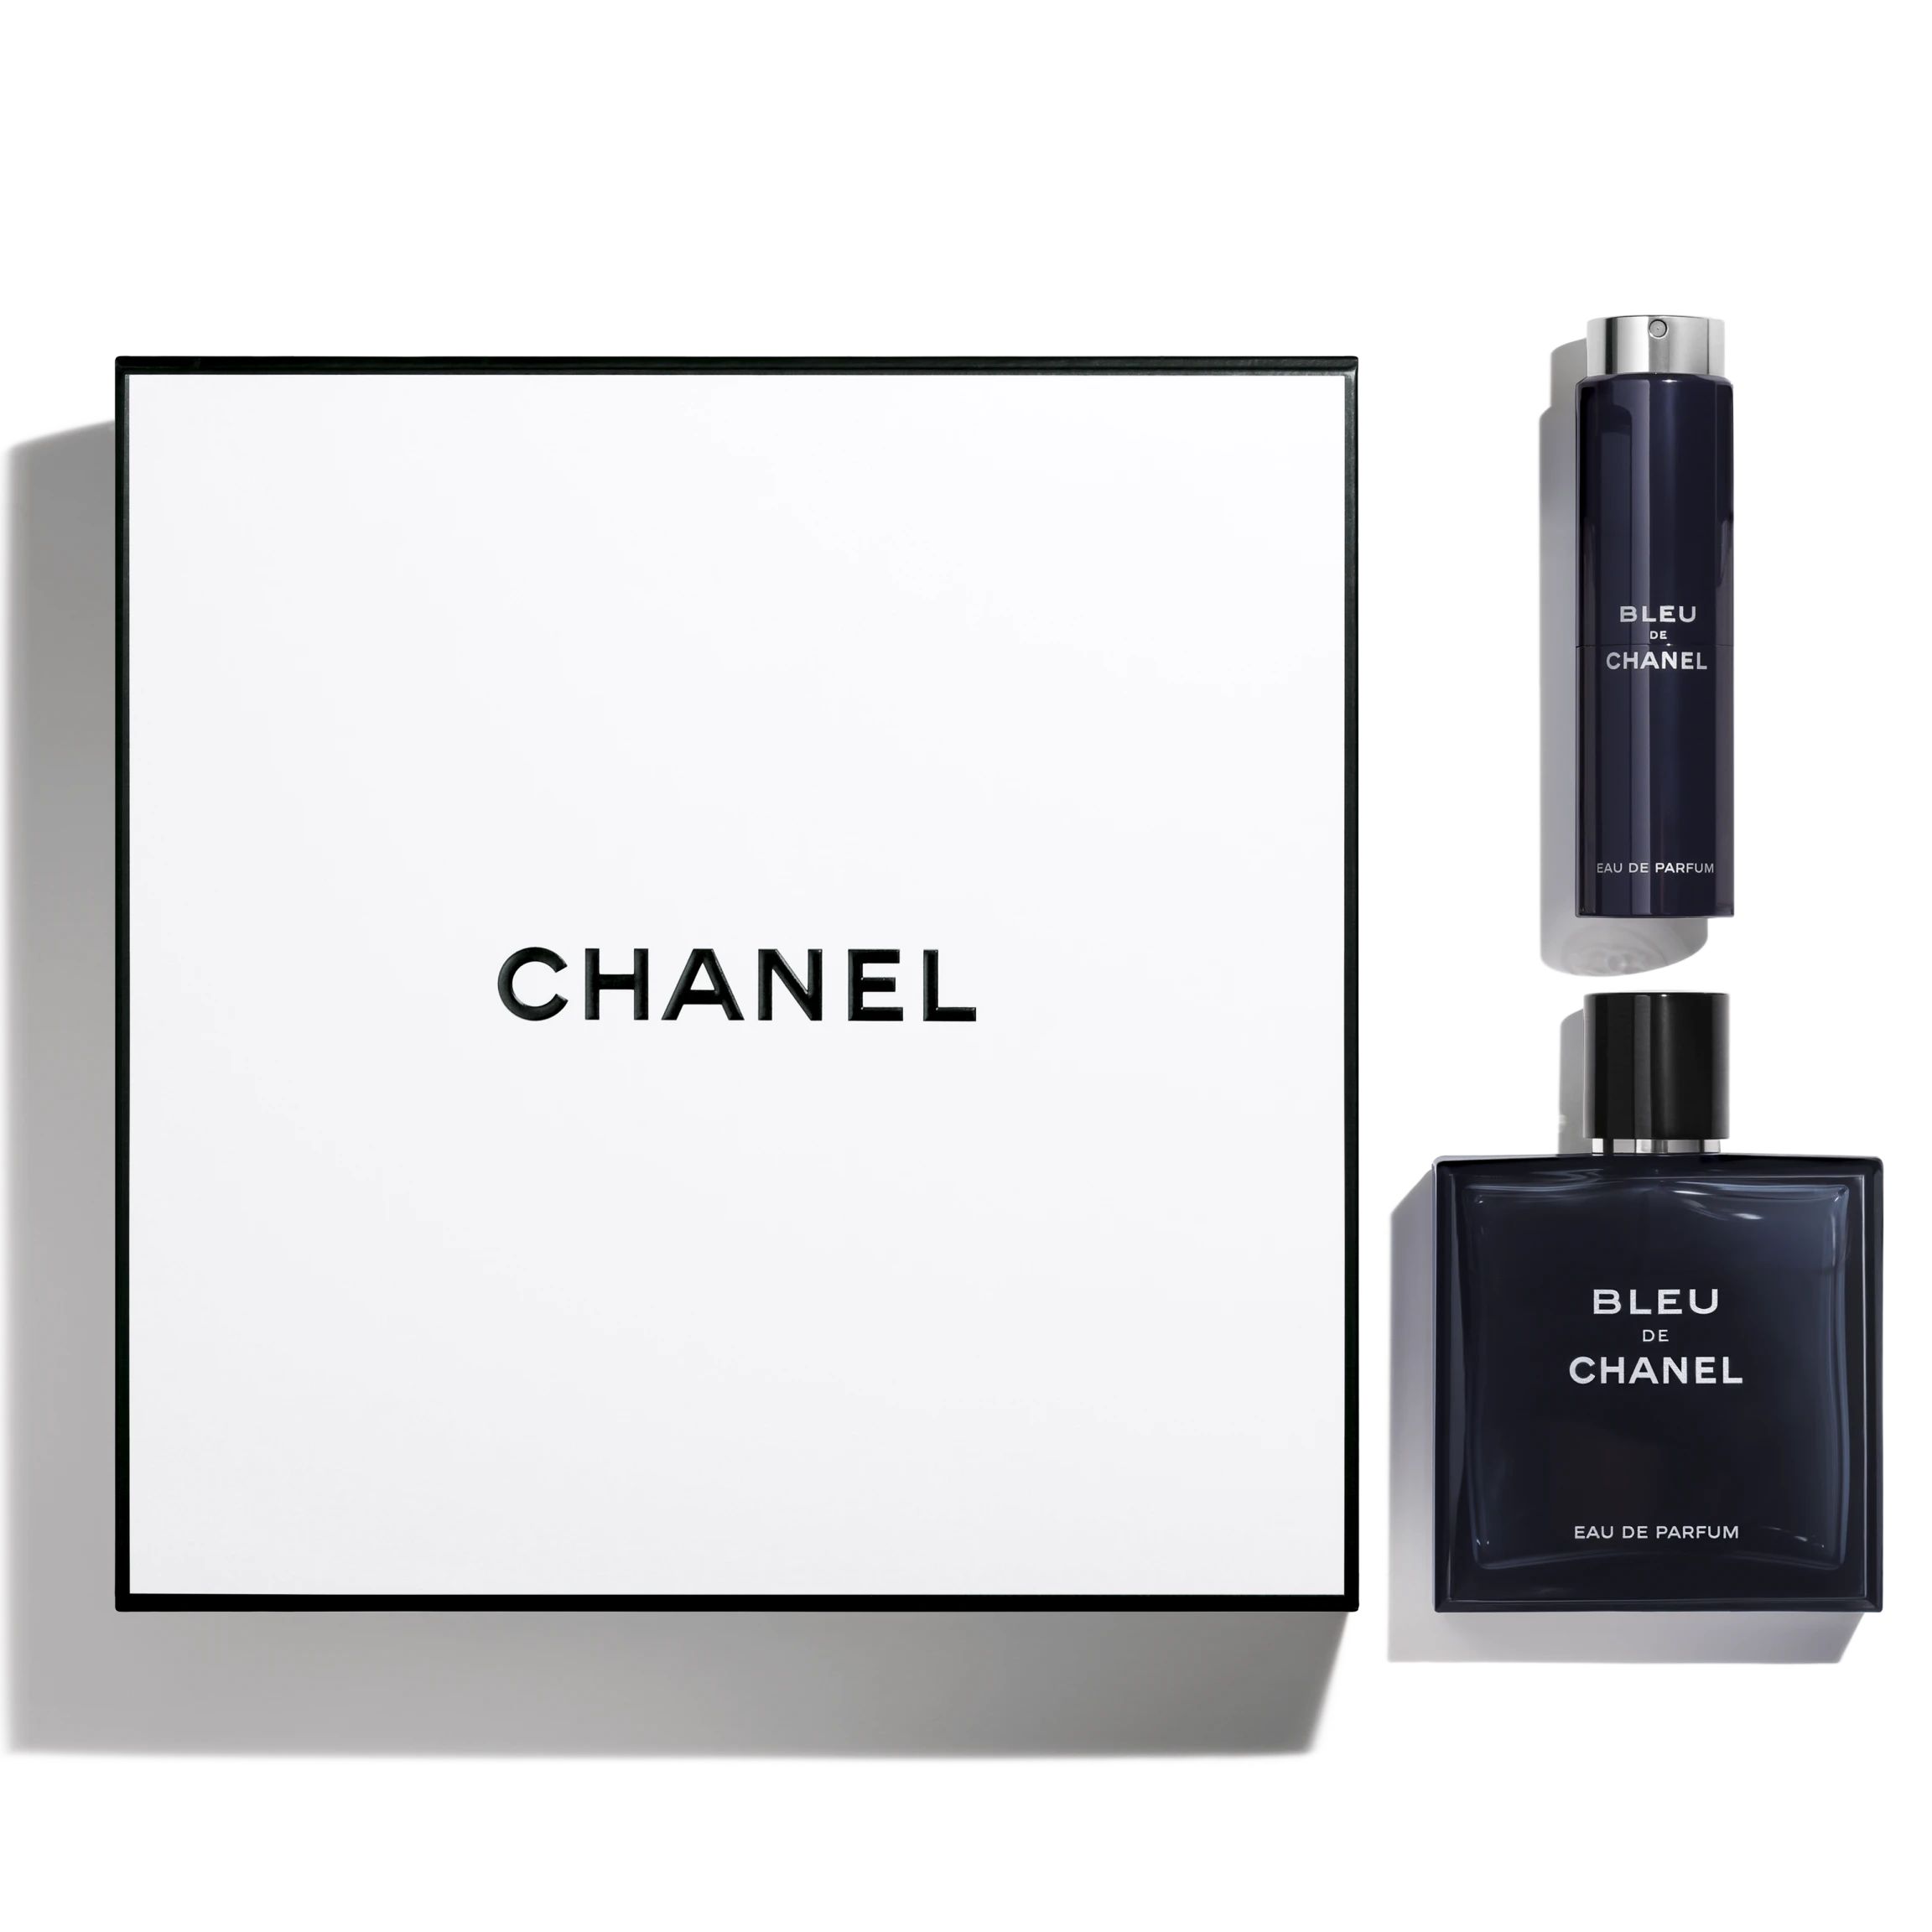 3.4 fl. oz. Eau de Parfum Twist and Spray Set | Chanel, Inc. (US)